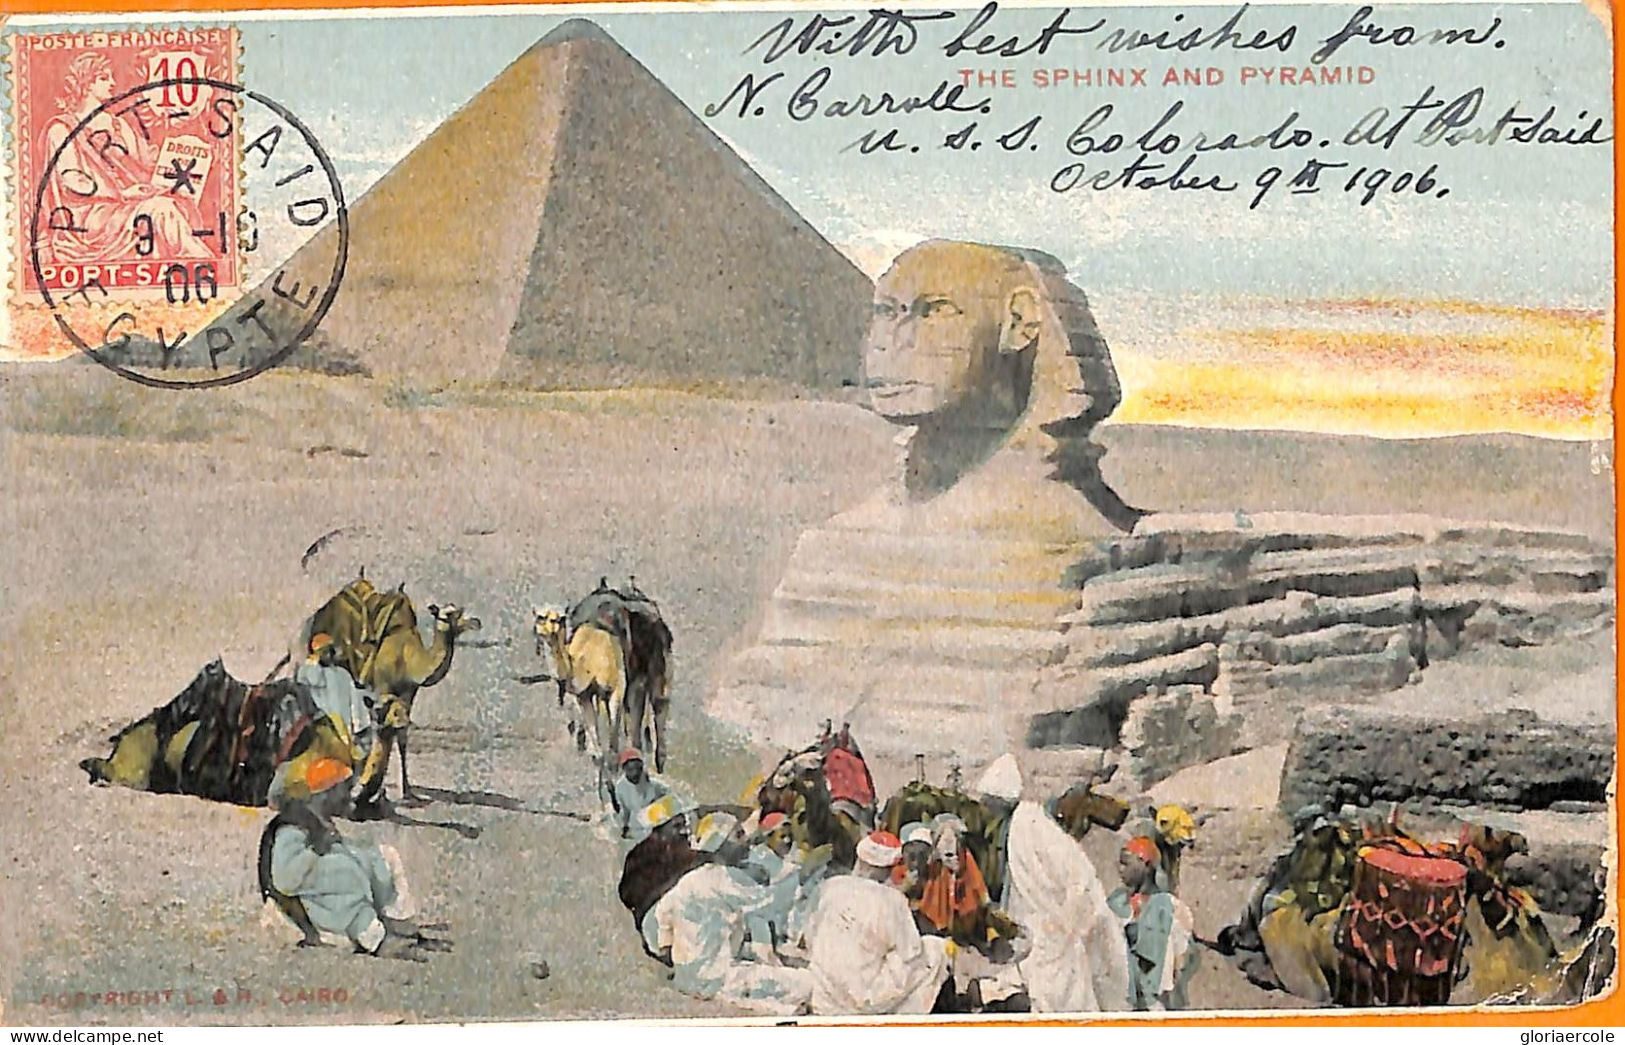 Aa0161 - FRENCH Port Said  EGYPT - POSTAL HISTORY - POSTCARD 1906 - Covers & Documents